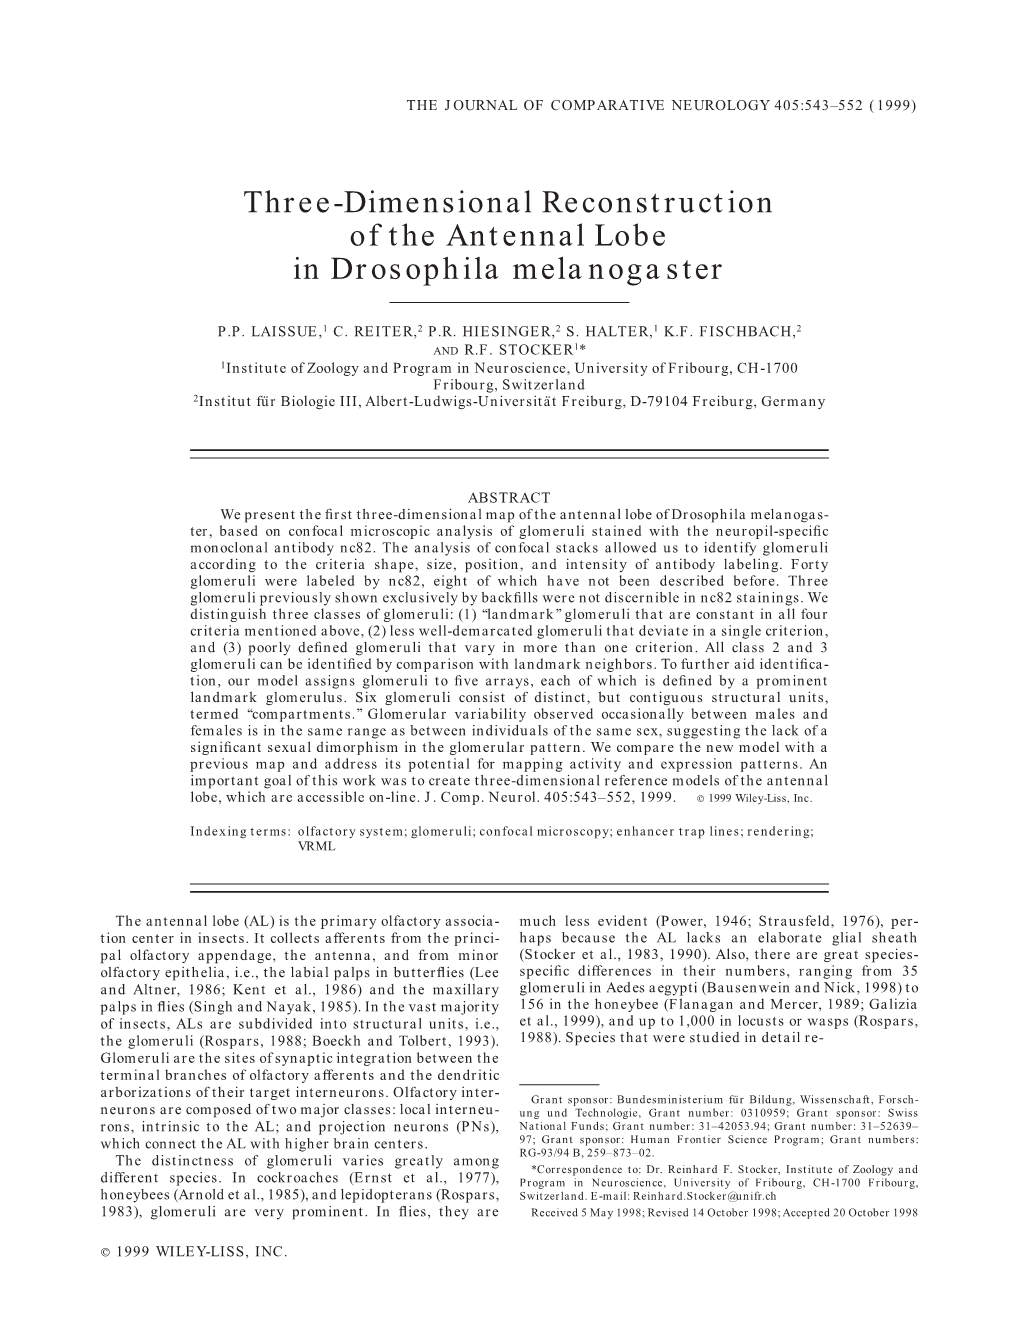 Three-Dimensional Reconstruction of the Antennal Lobe in Drosophila Melanogaster